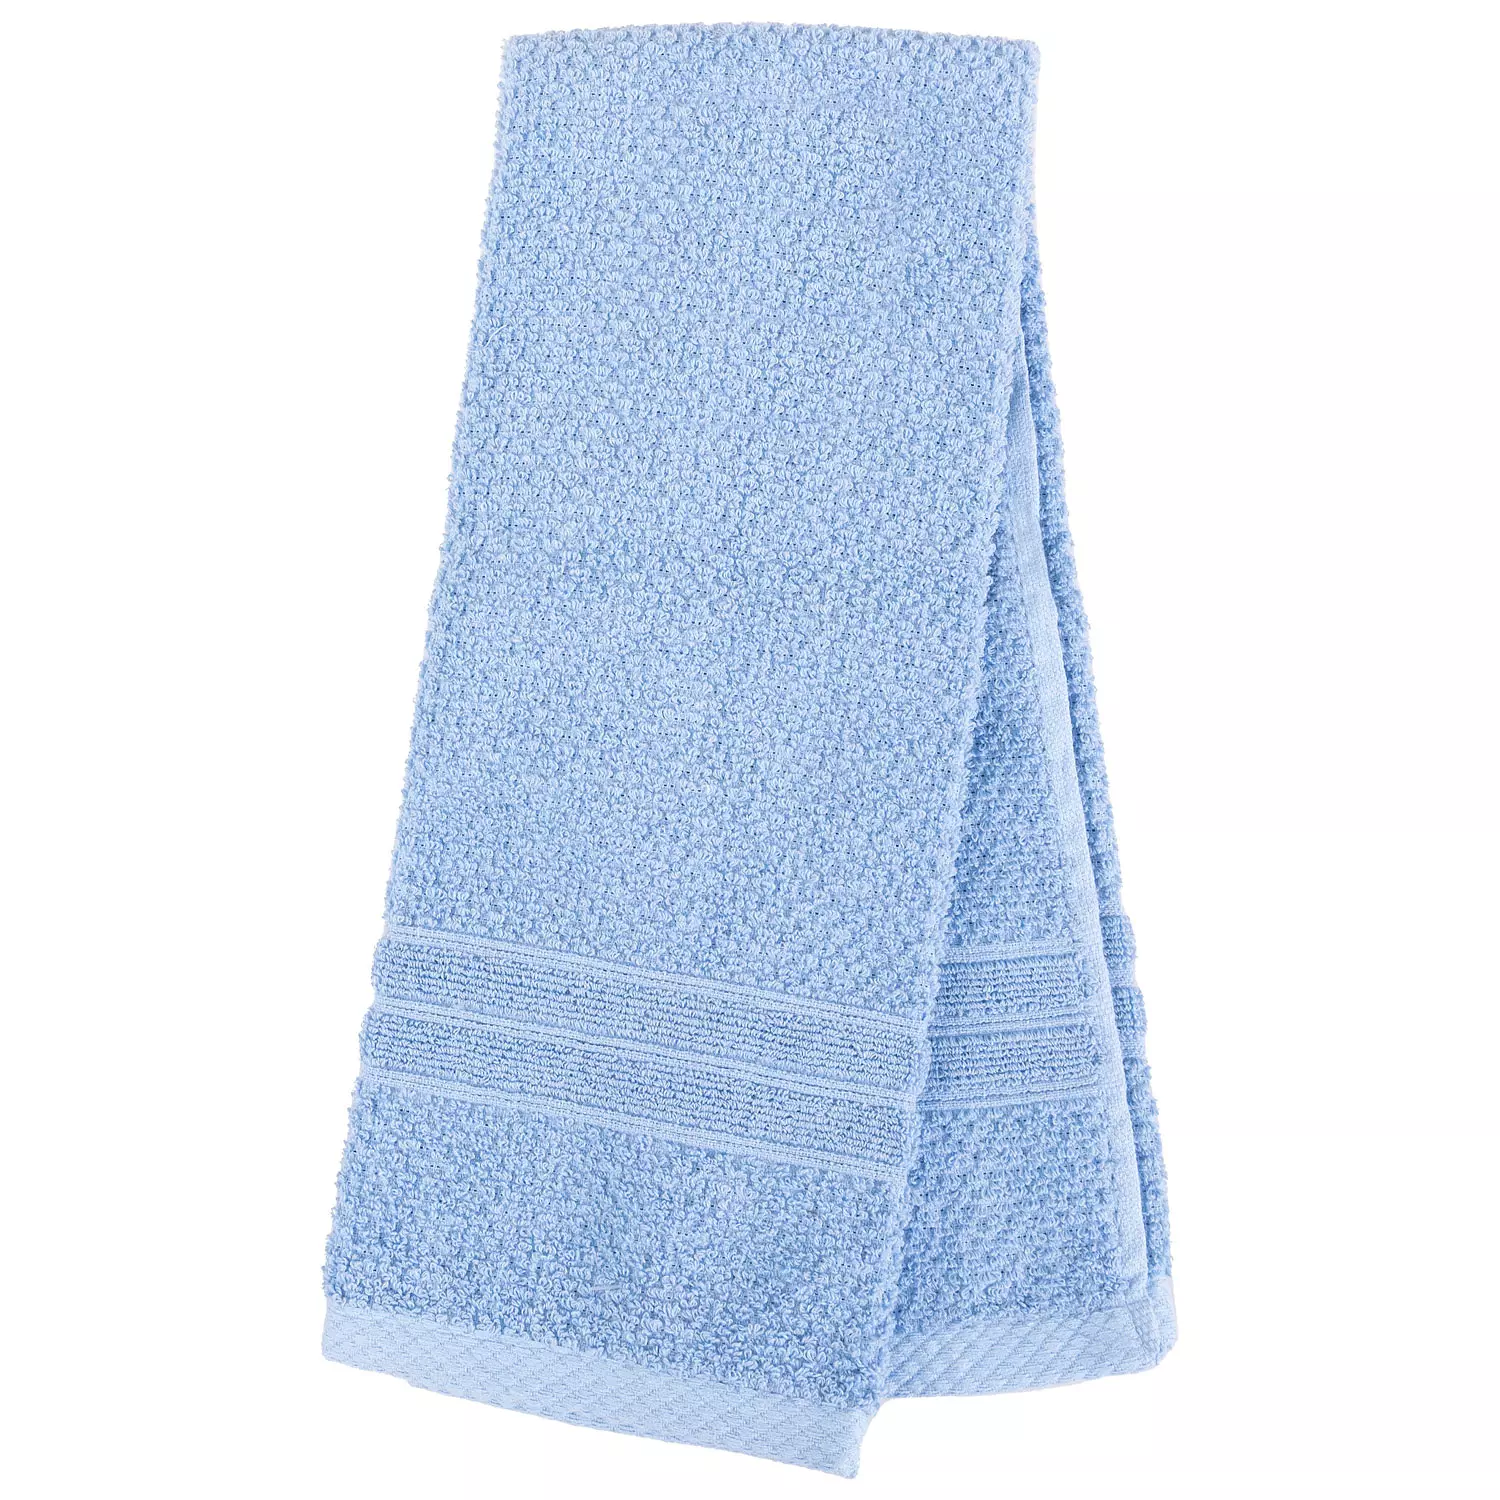 Hand towel, 16"x28", blue